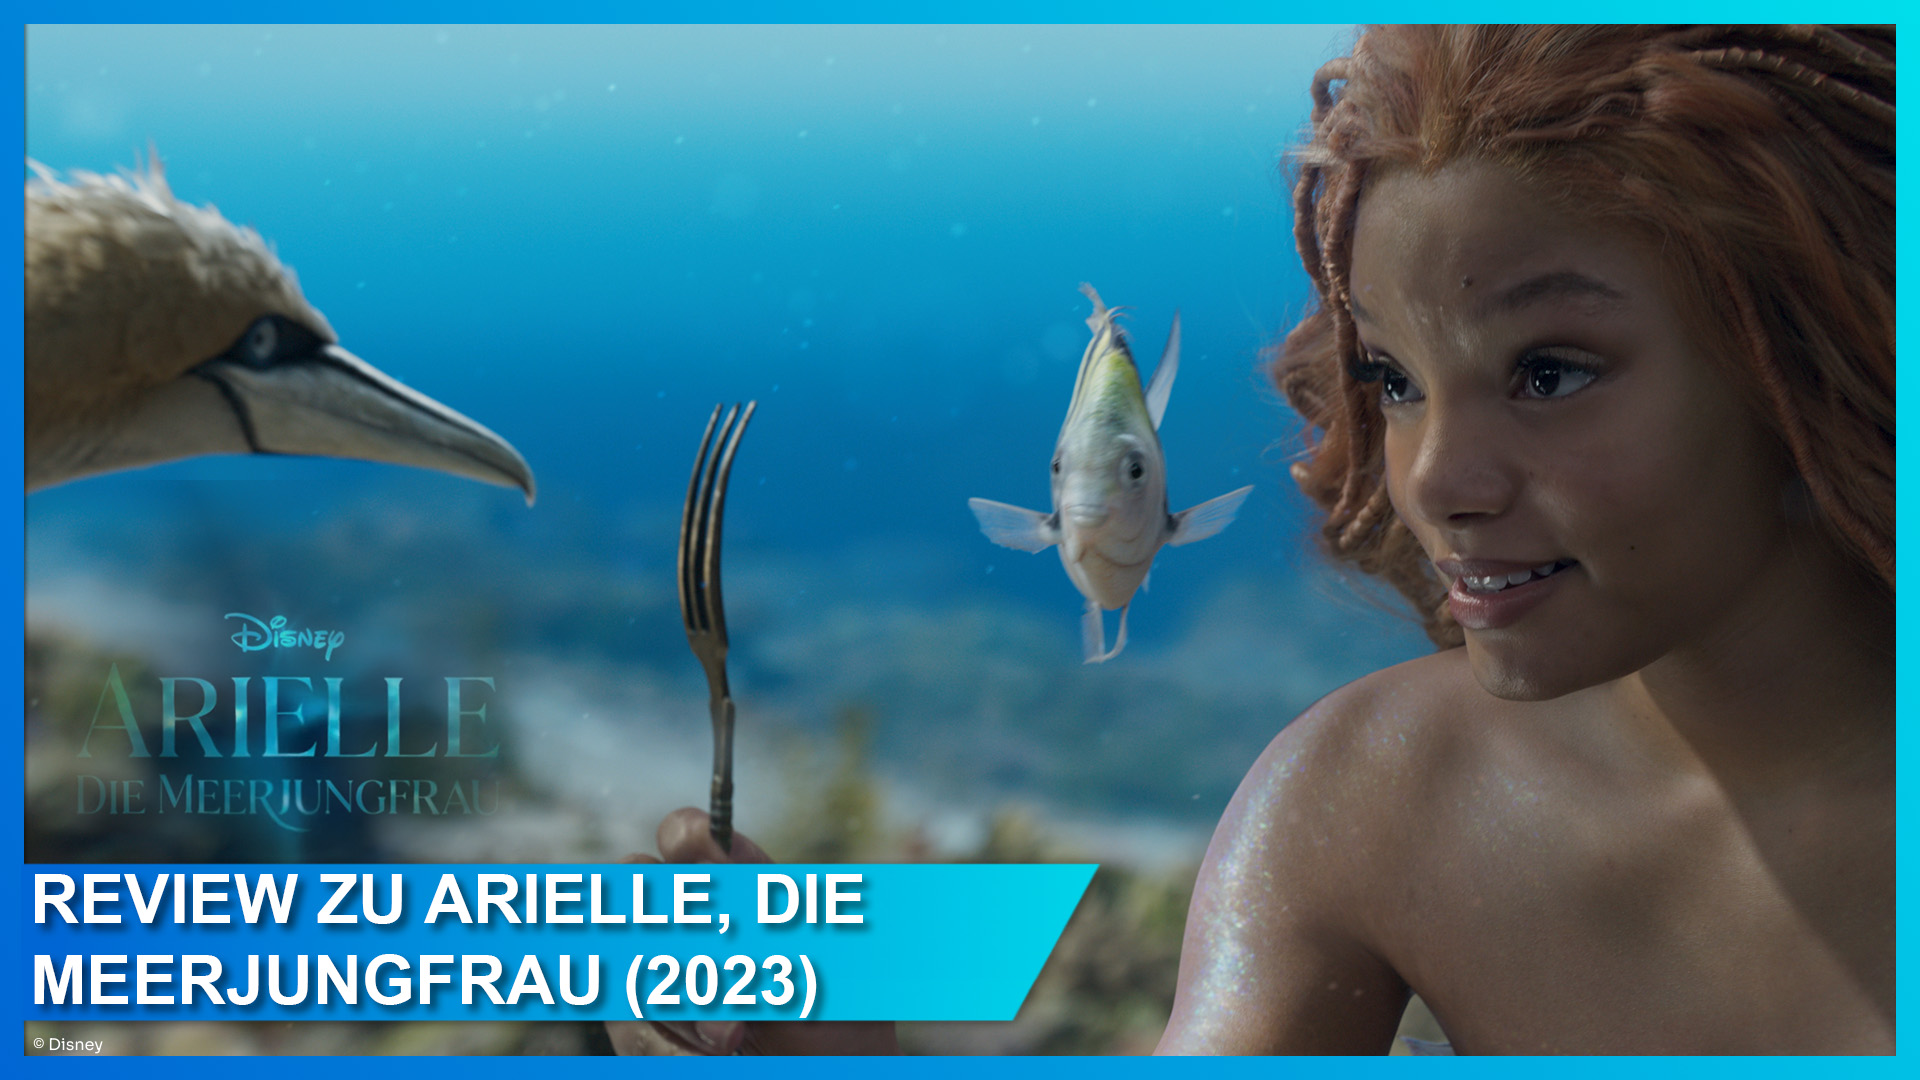 Review zum Live Action Remake Arielle, die Meerjungfrau (2023)